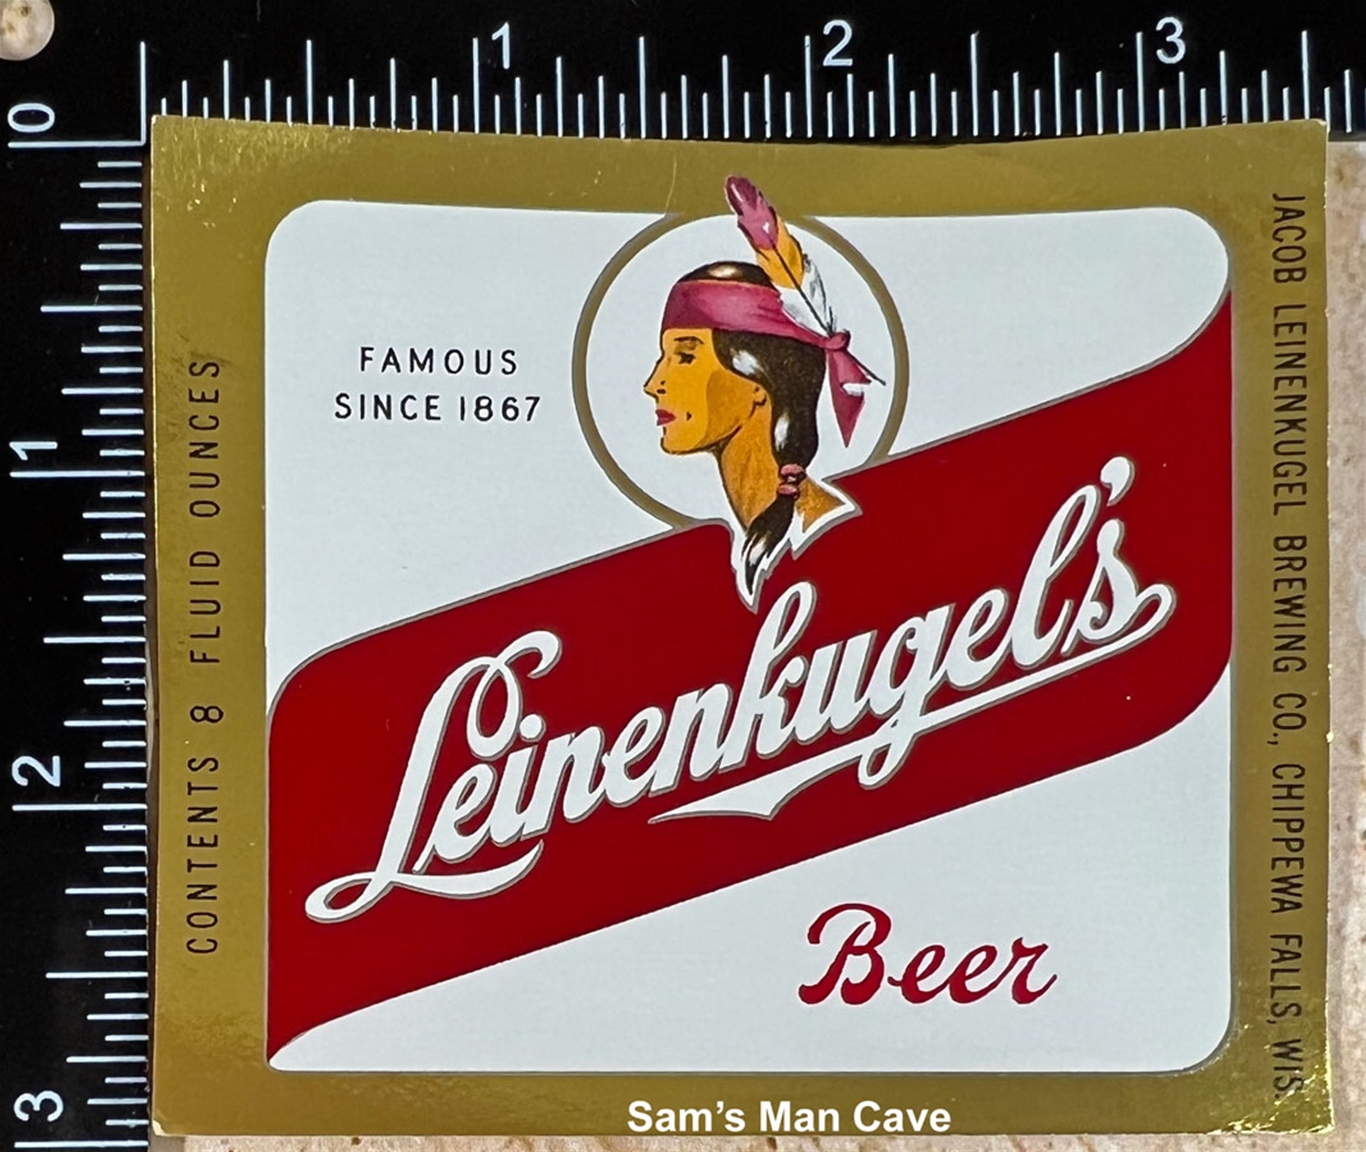 Leinenkugel Beer IRTP Bottle Label Chippewa Falls Wis 